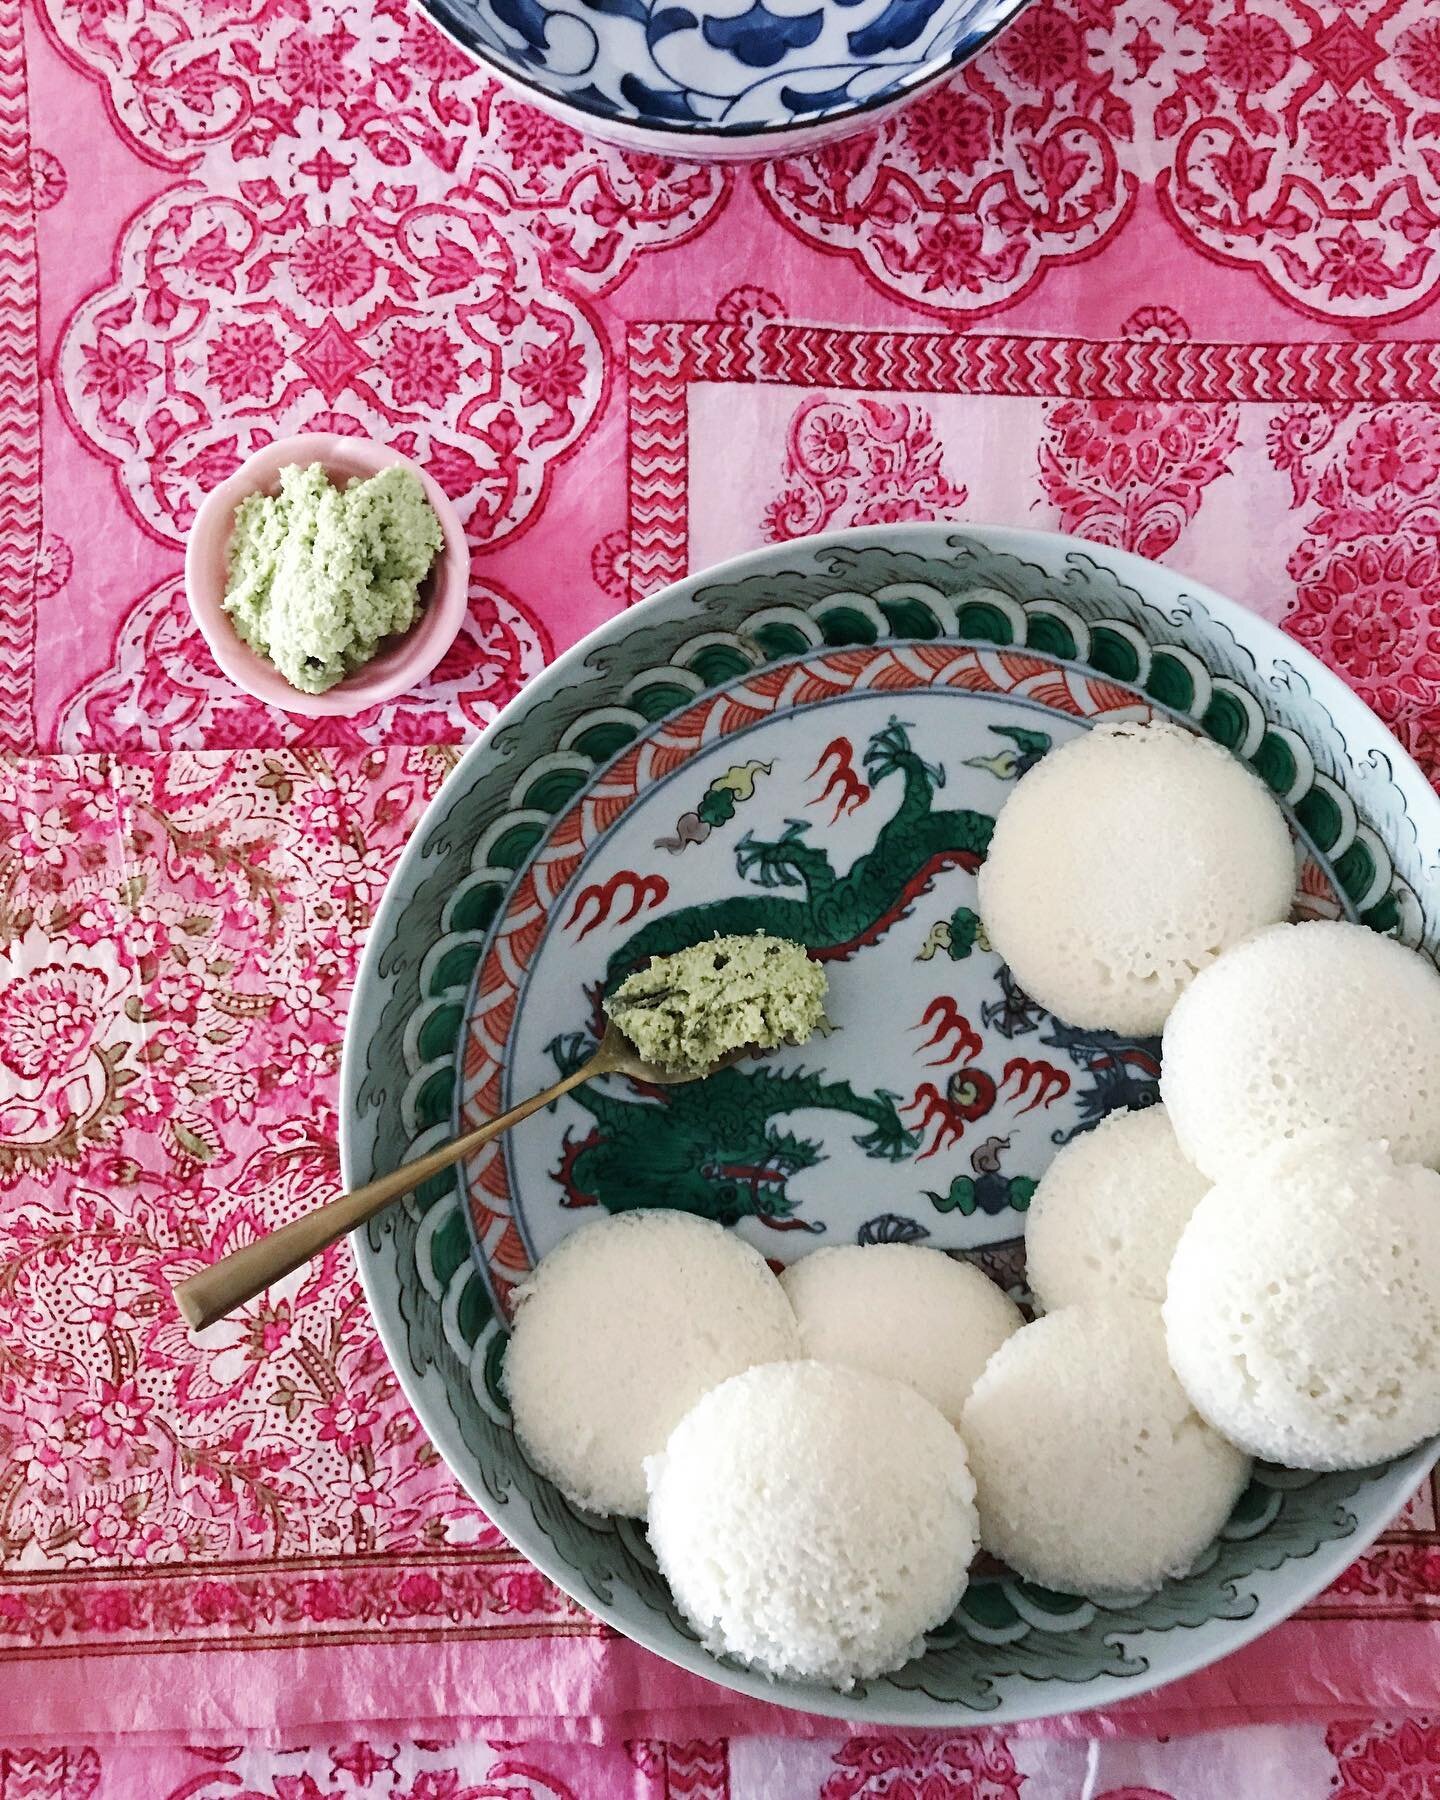 Fantasising about food I wish someone would bring me 😋

#spicemama #bombaydreaming #indianfood #indialove #homecooking #homesick #food #nostalgia #sundaybrunch #perthfood